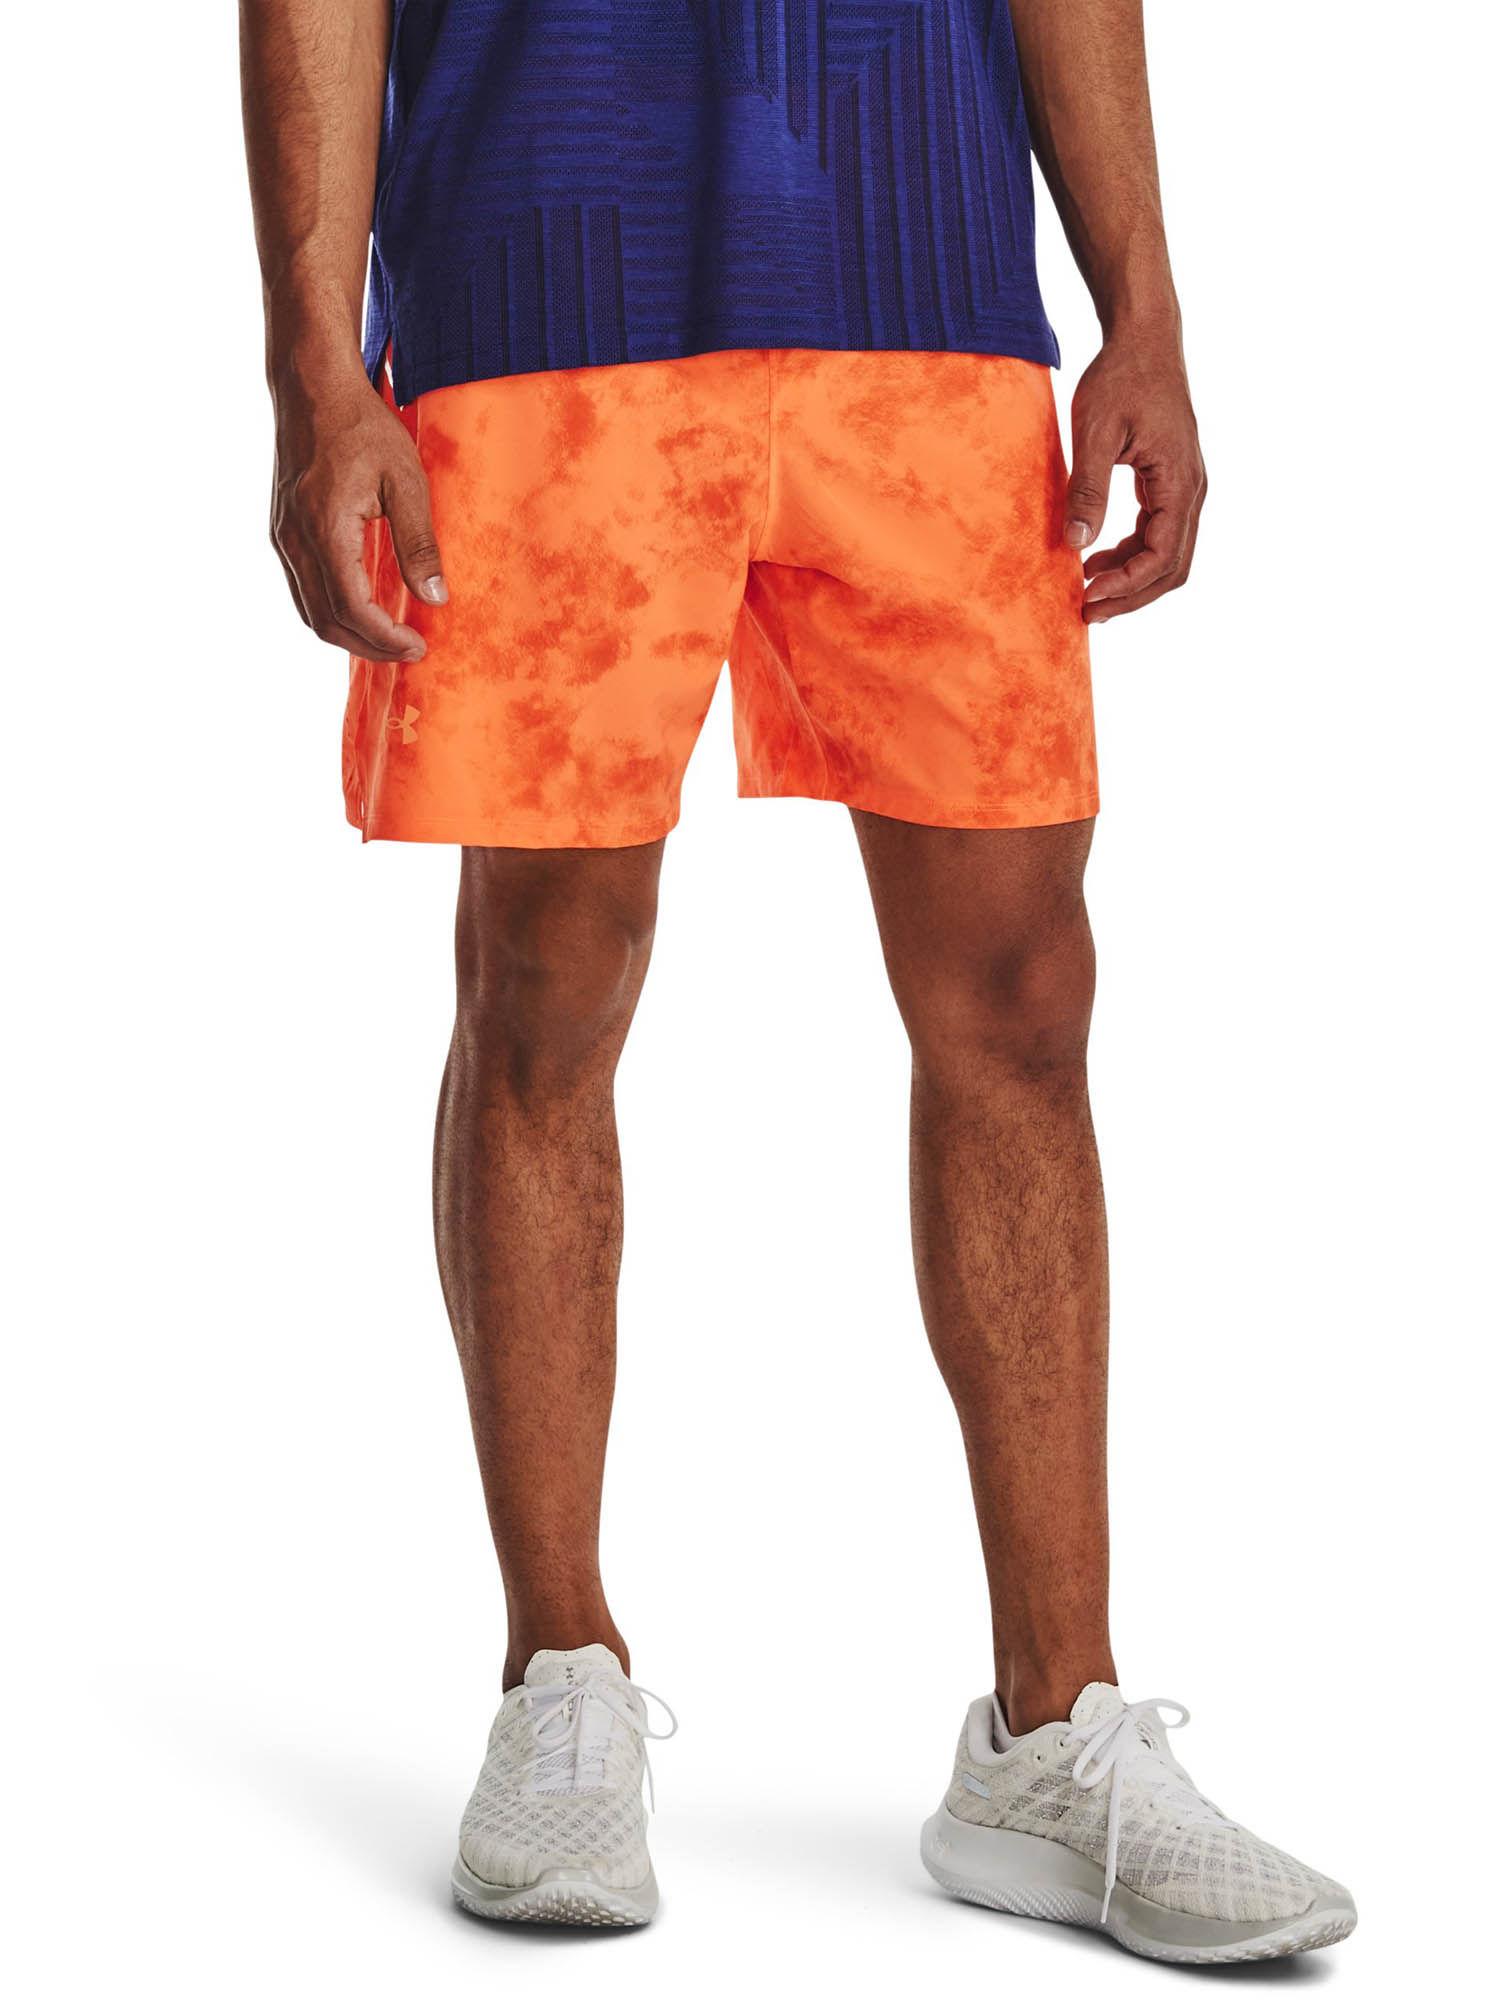 launch elite shorts-orange